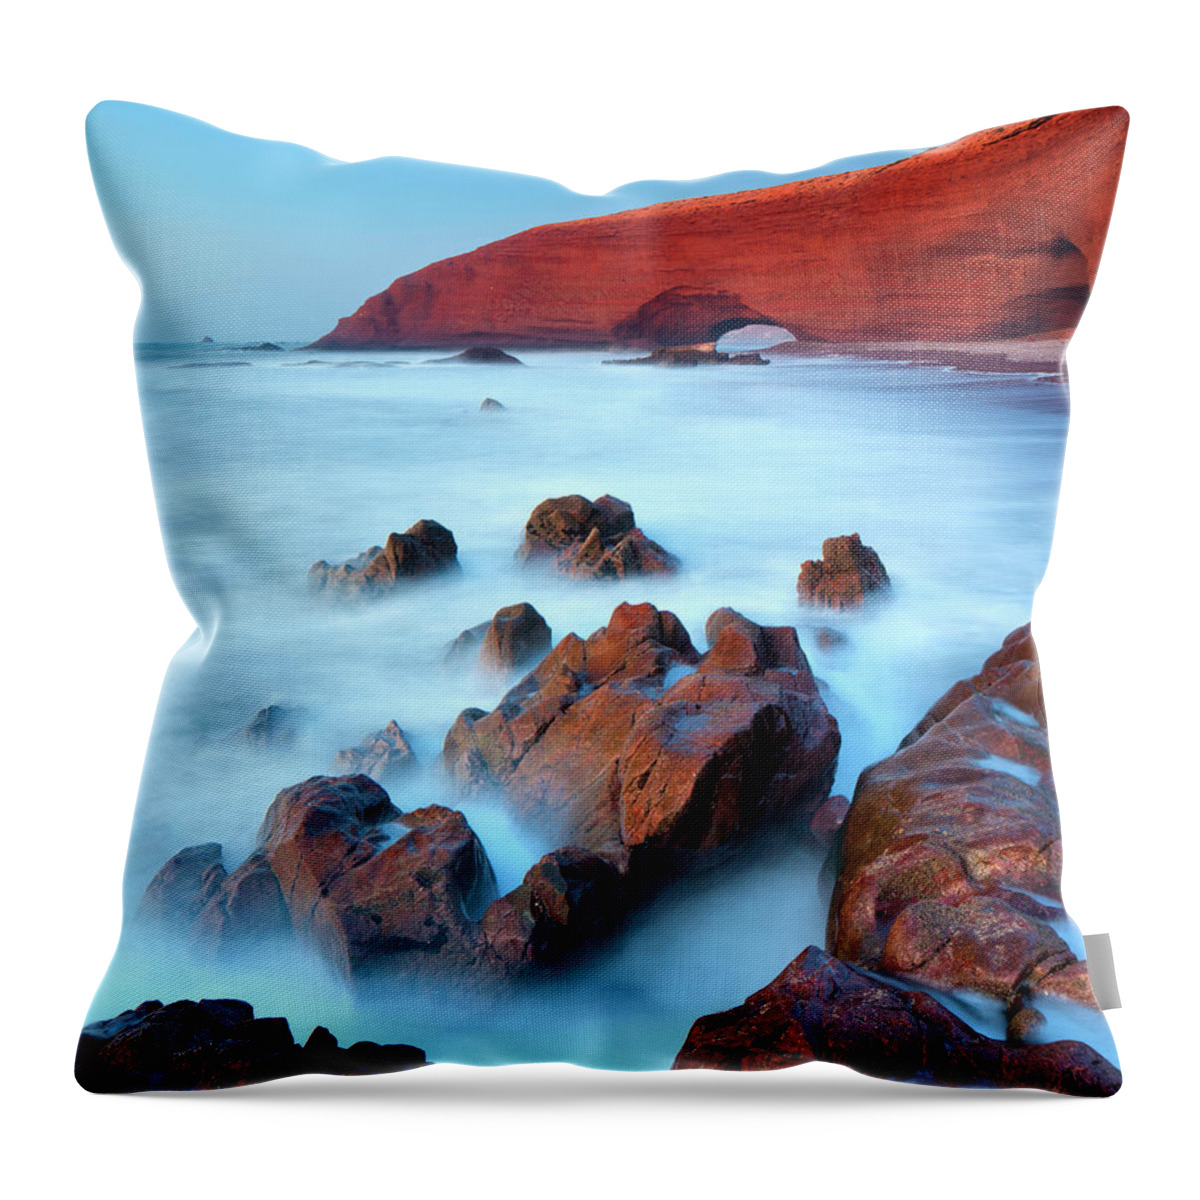 Estock Throw Pillow featuring the digital art Coastal Natural Arches, Morocco #4 by Massimo Ripani